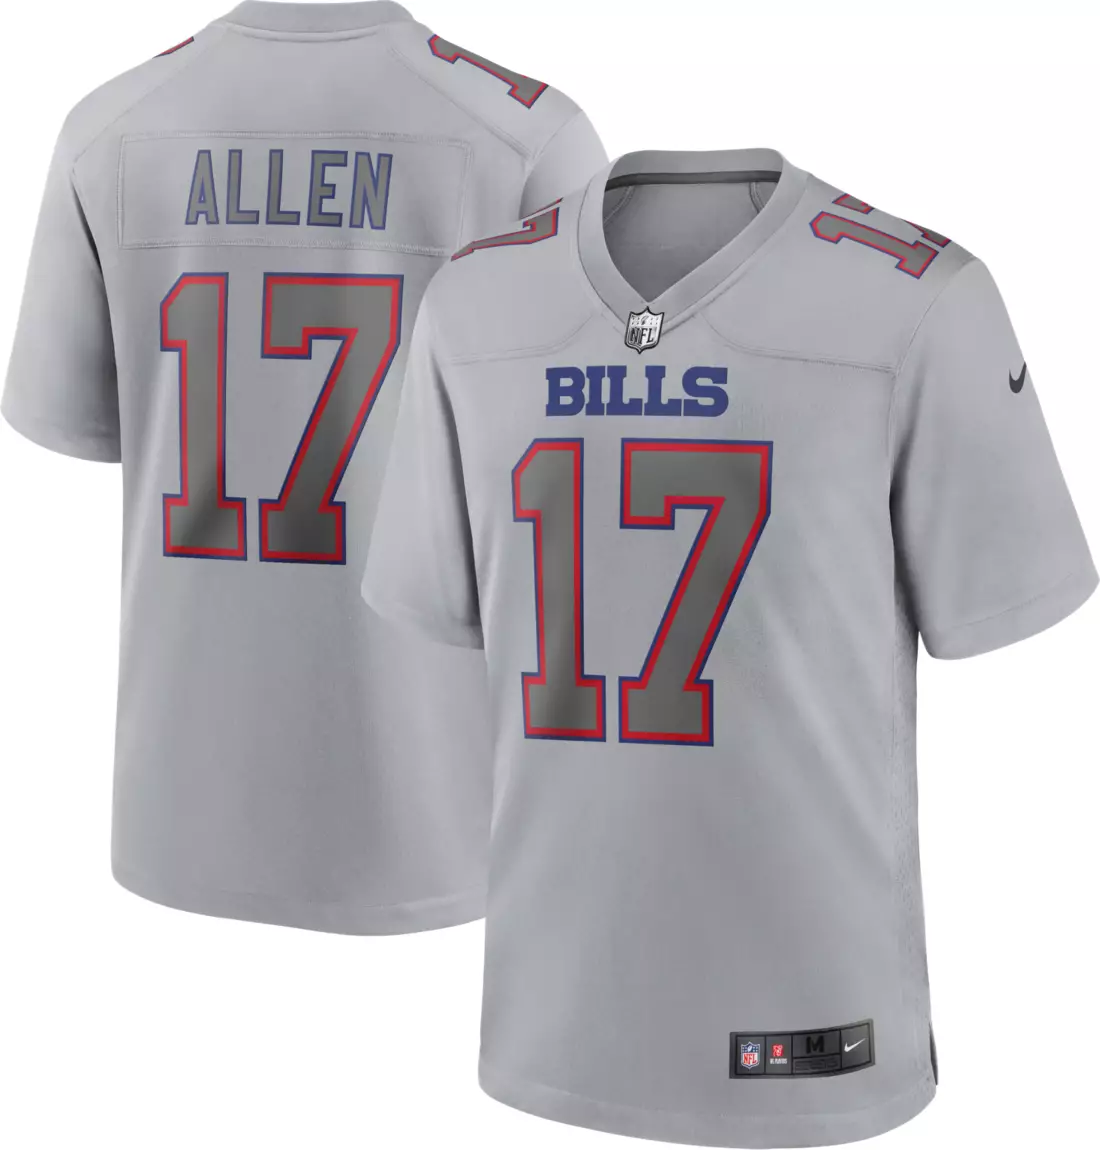 Nike-Mens-Buffalo-Bills-Josh-Allen-17-Atmosphere-Grey-Game-Jersey